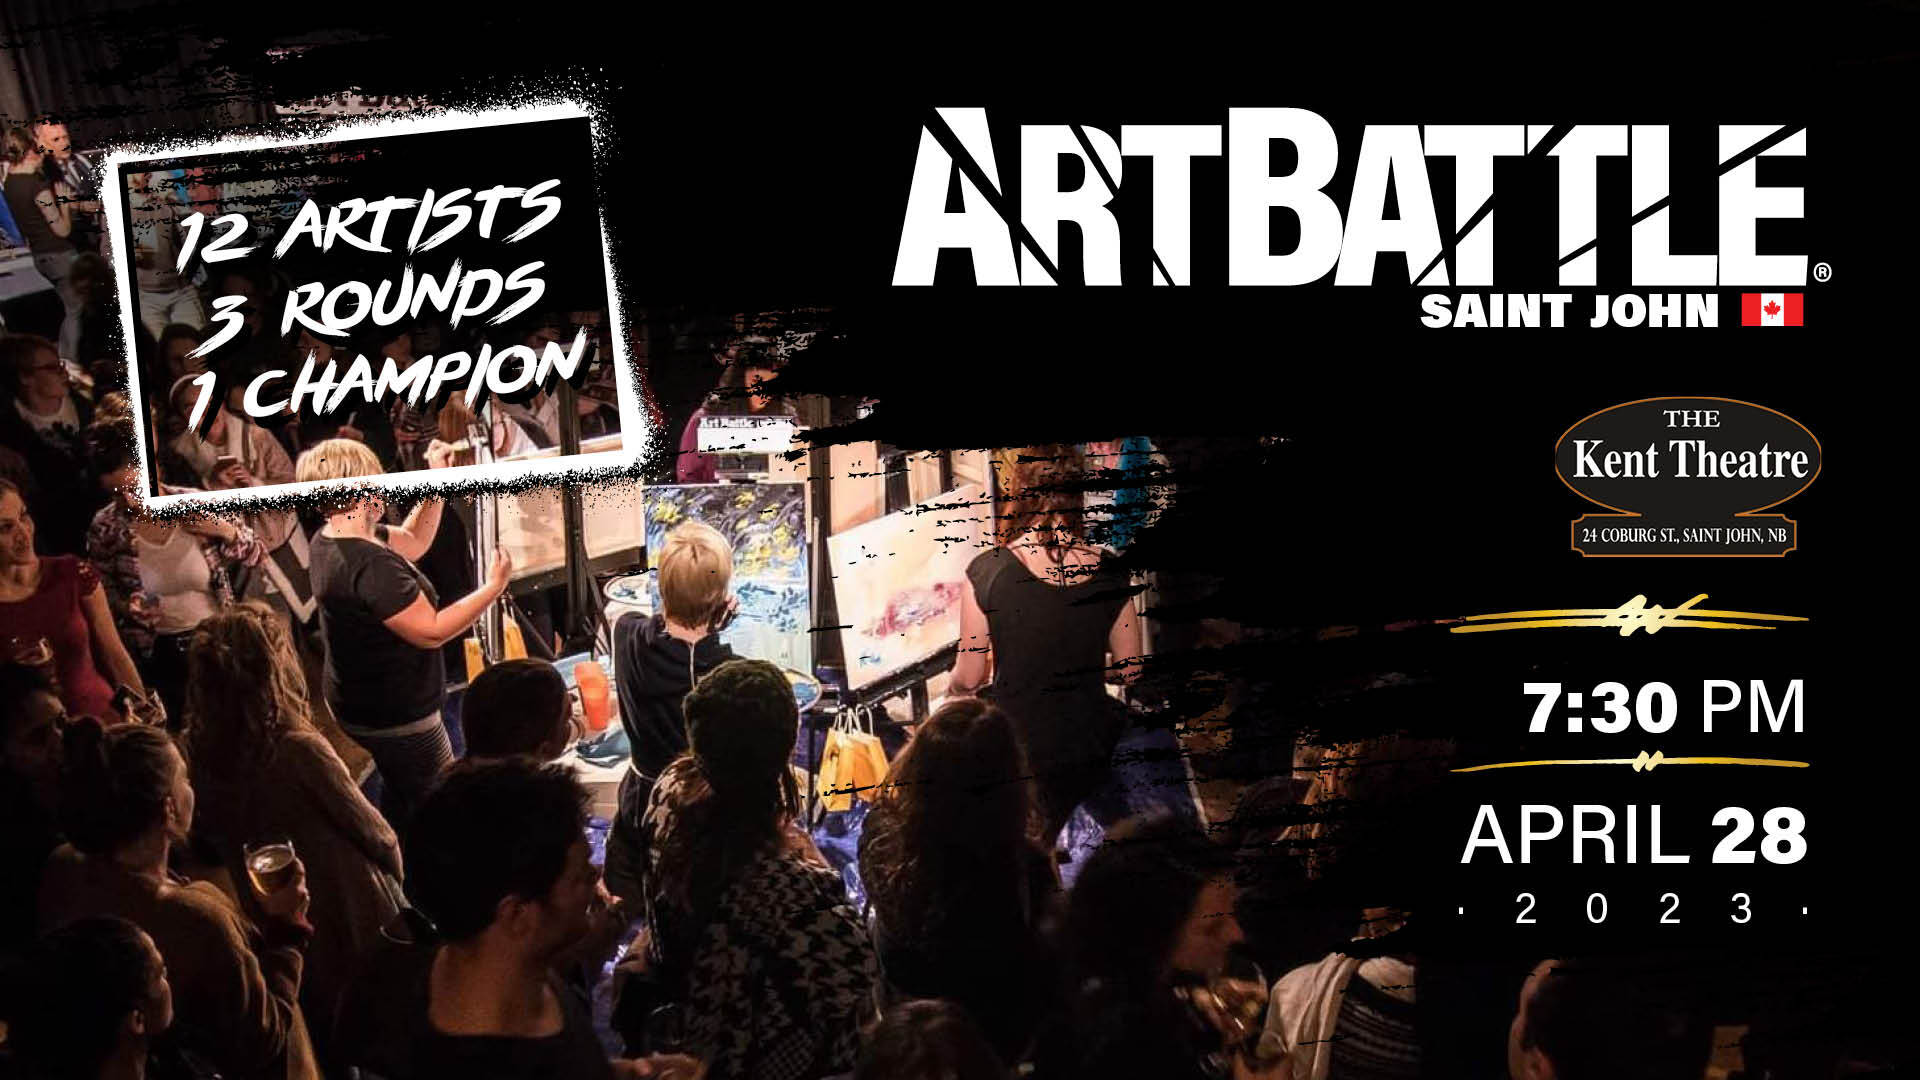 12 artists, 3 rounds, 1 champion. Art Battle Saint John at the Kent Theatre, 7:30pm, April 29, 2023